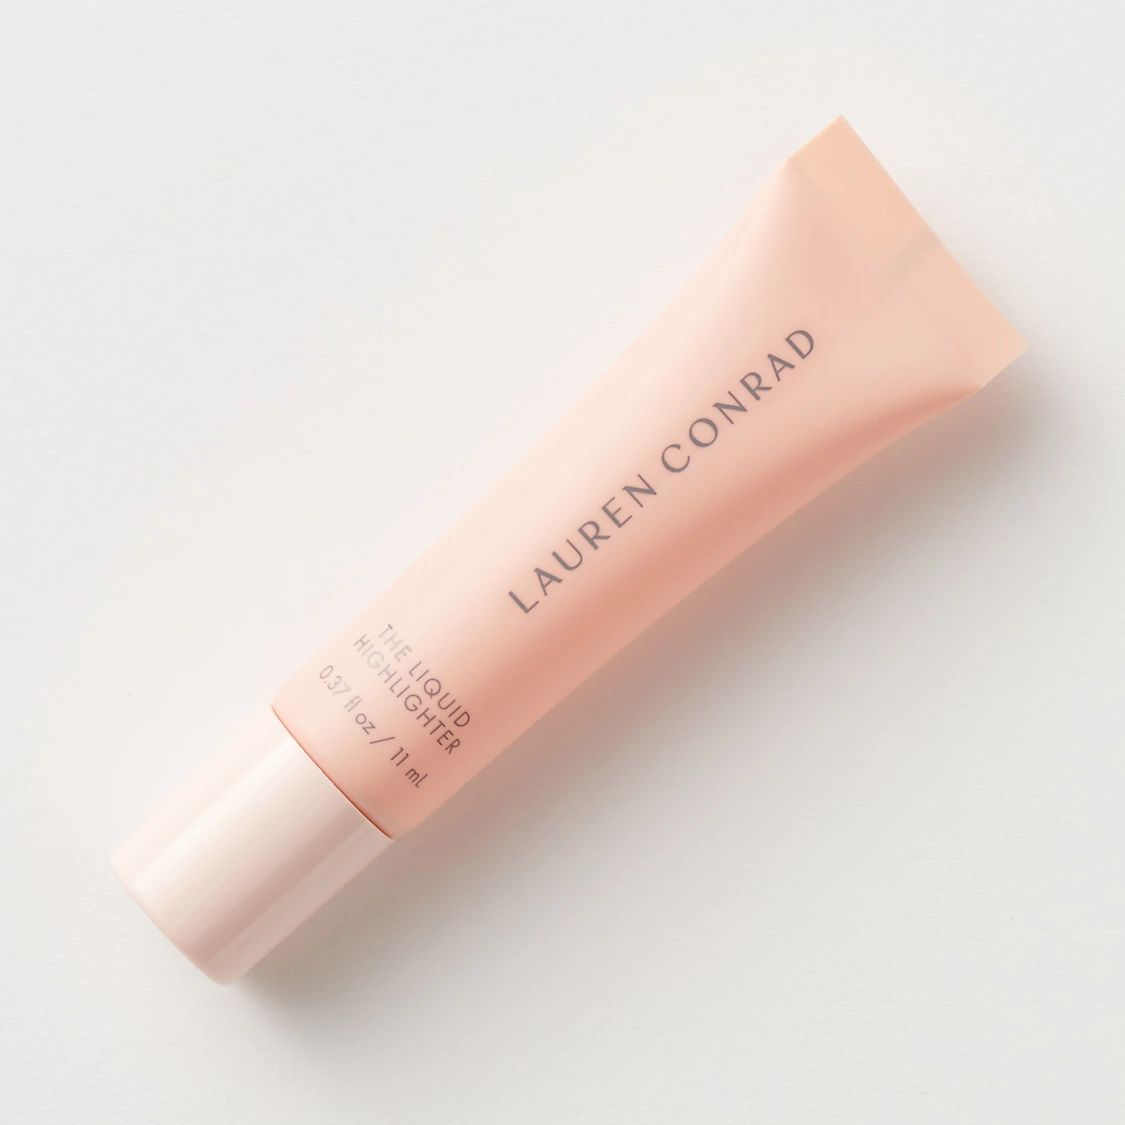 Lauren Conrad Beauty The Liquid Highlighter | Kohl's